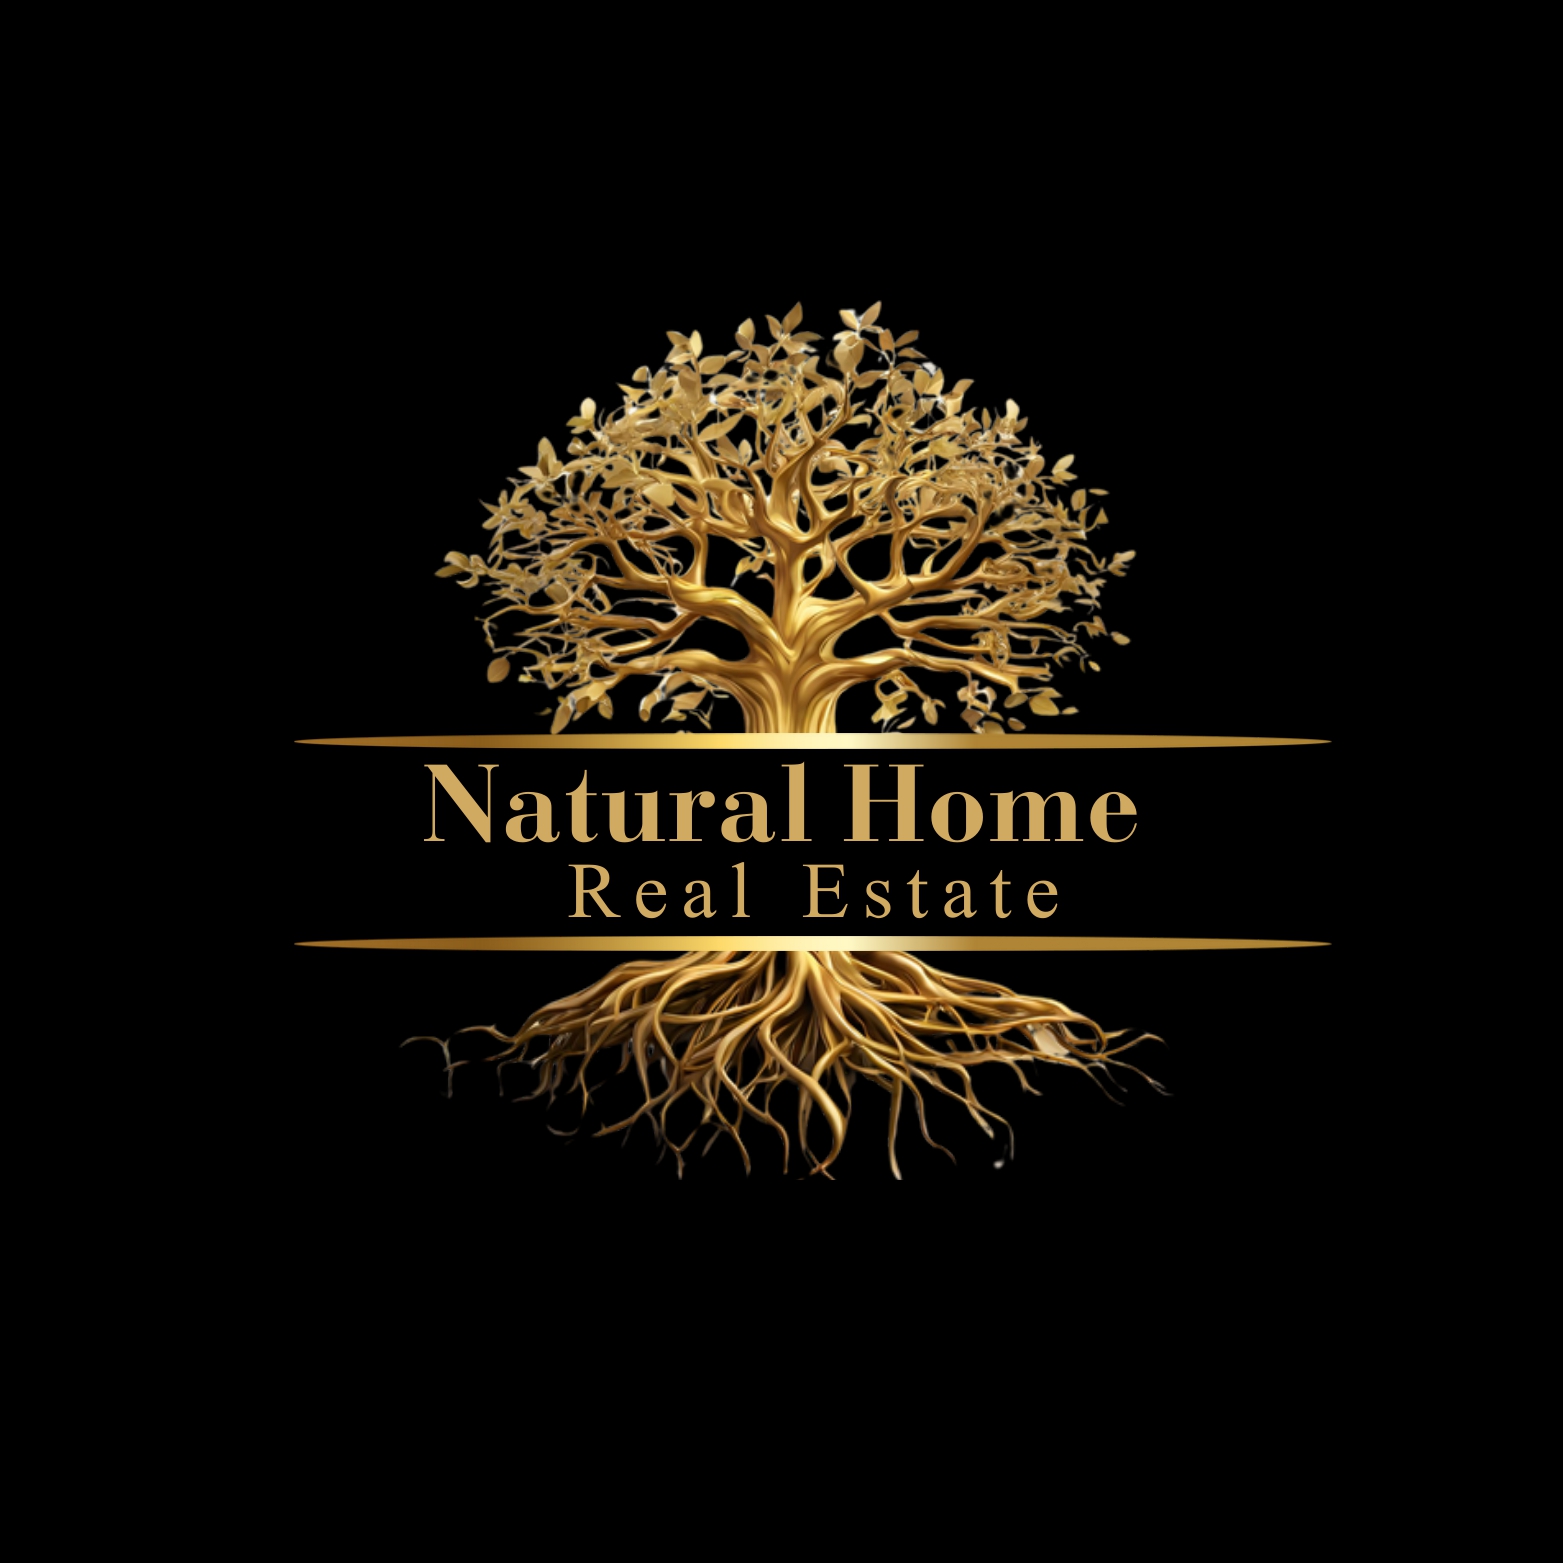 Natural Home Real Estate